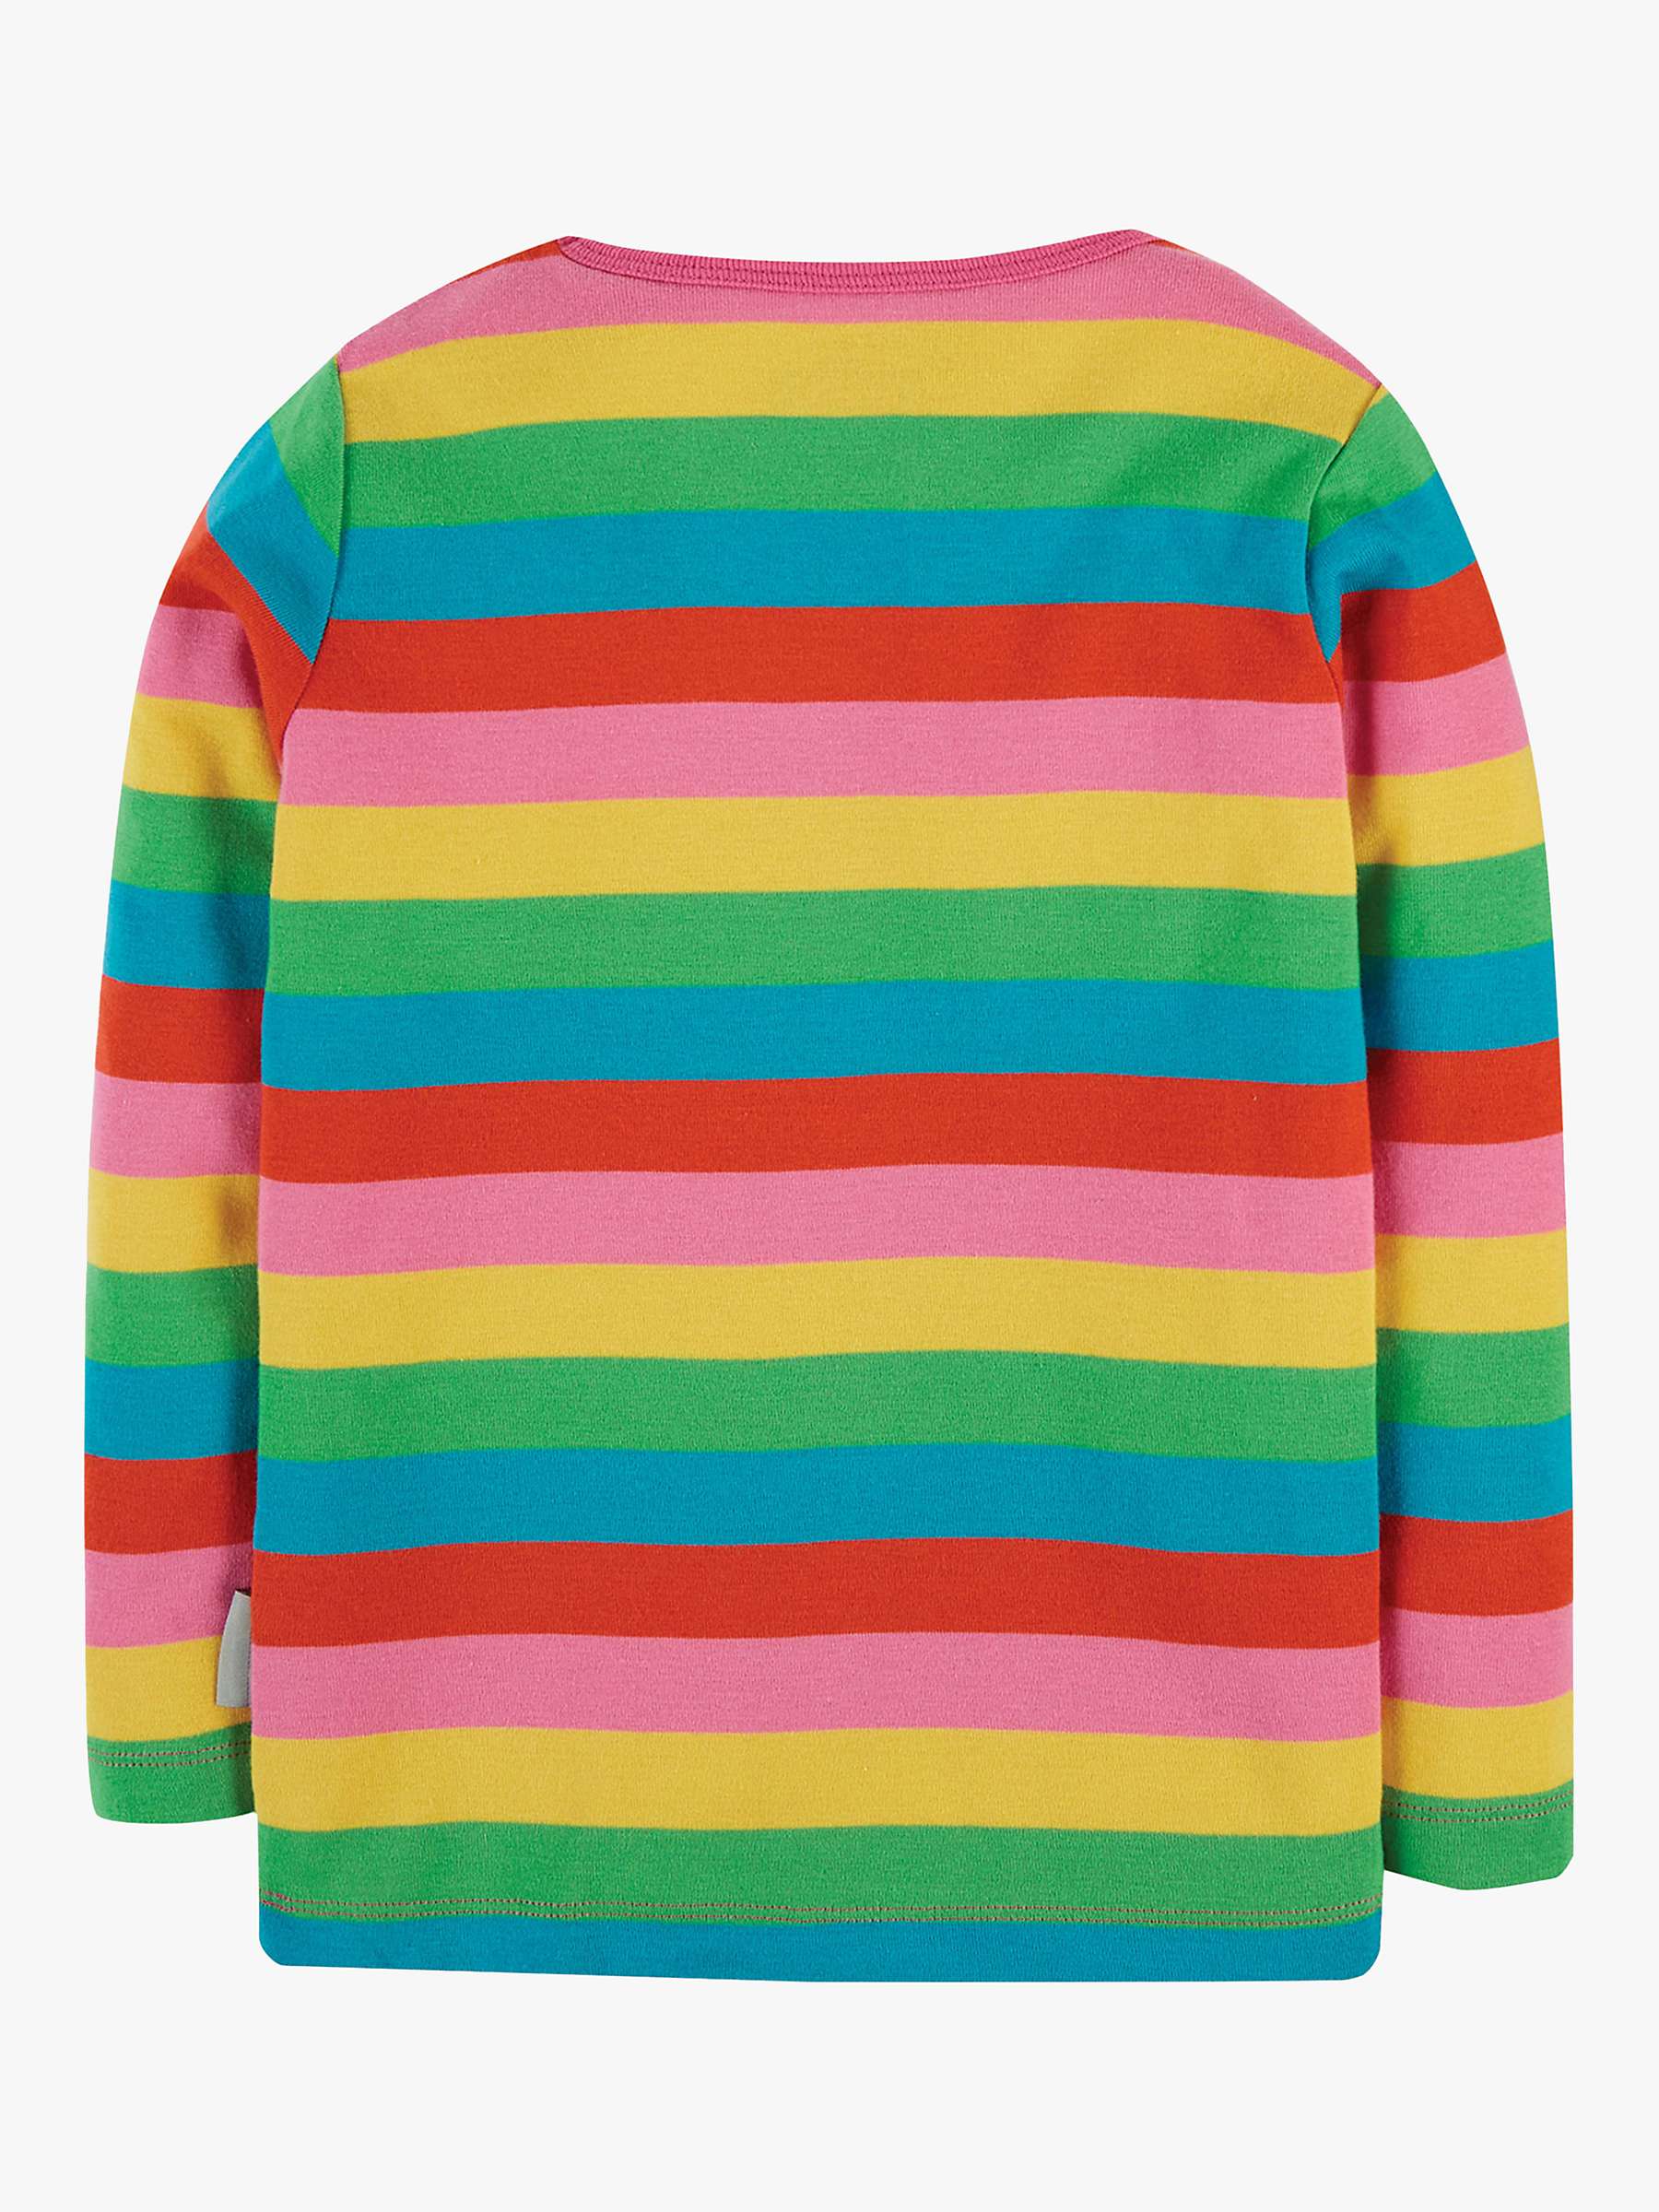 Buy Frugi Kids' Favourite Long Sleeve Rainbow Stripe T-Shirt, Multi Online at johnlewis.com